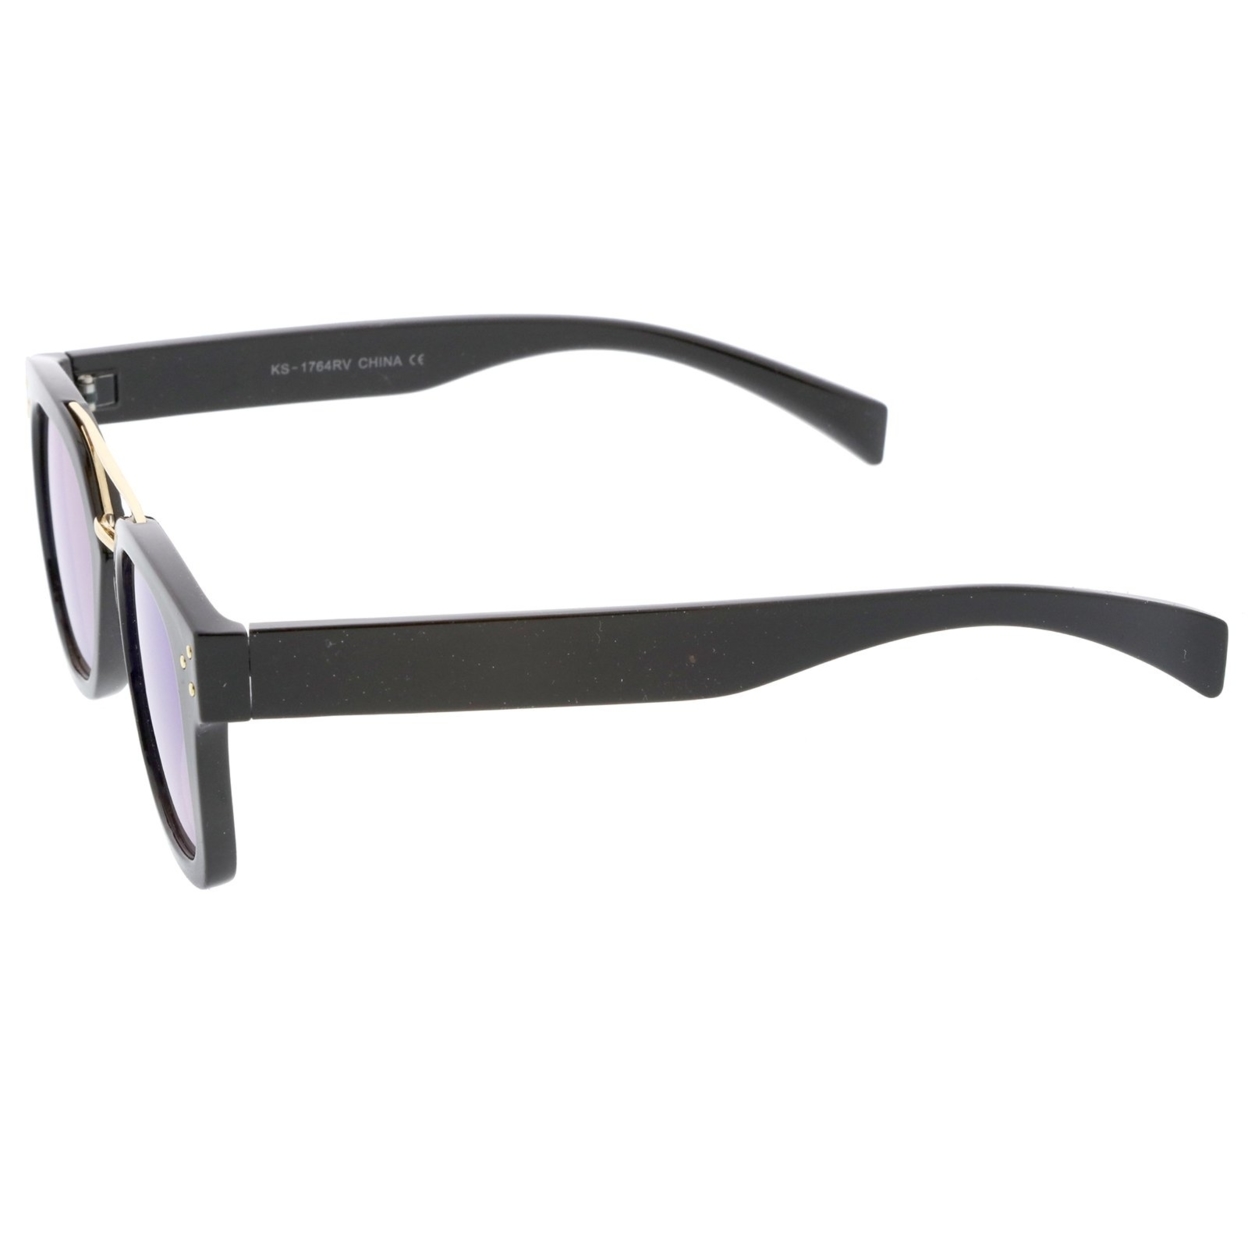 Modern Horn Rim Metal Crossbar Square Flat Mirrored Lens Aviator Sunglasses 48mm - Brown Camo / Orange Mirror